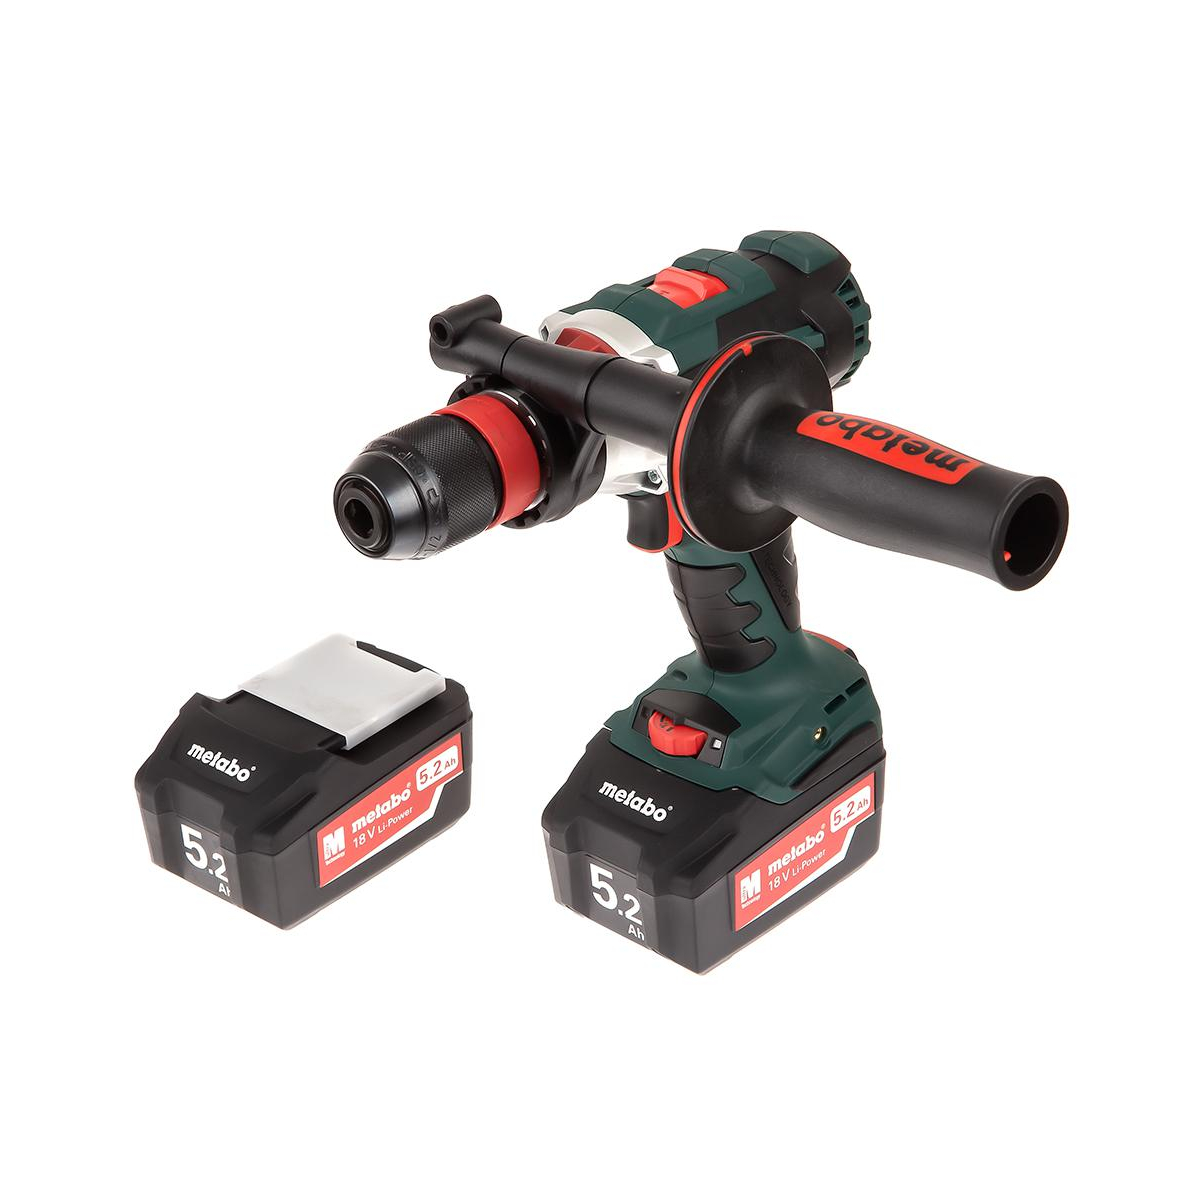 SB 18 LTX BL Q I (602361660) Cordless hammer drill